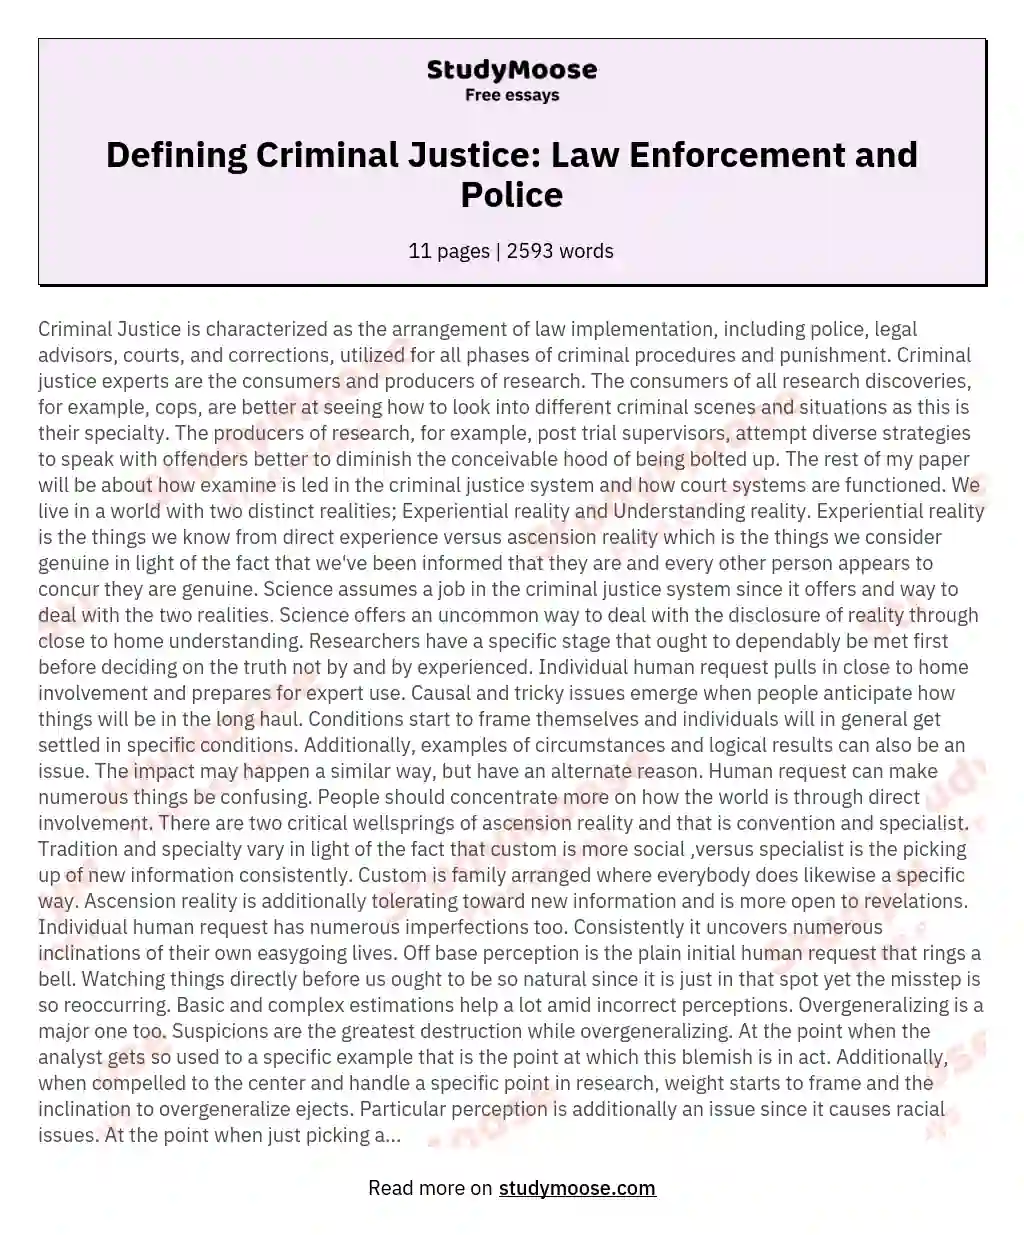 Defining Criminal Justice: Law Enforcement and Police